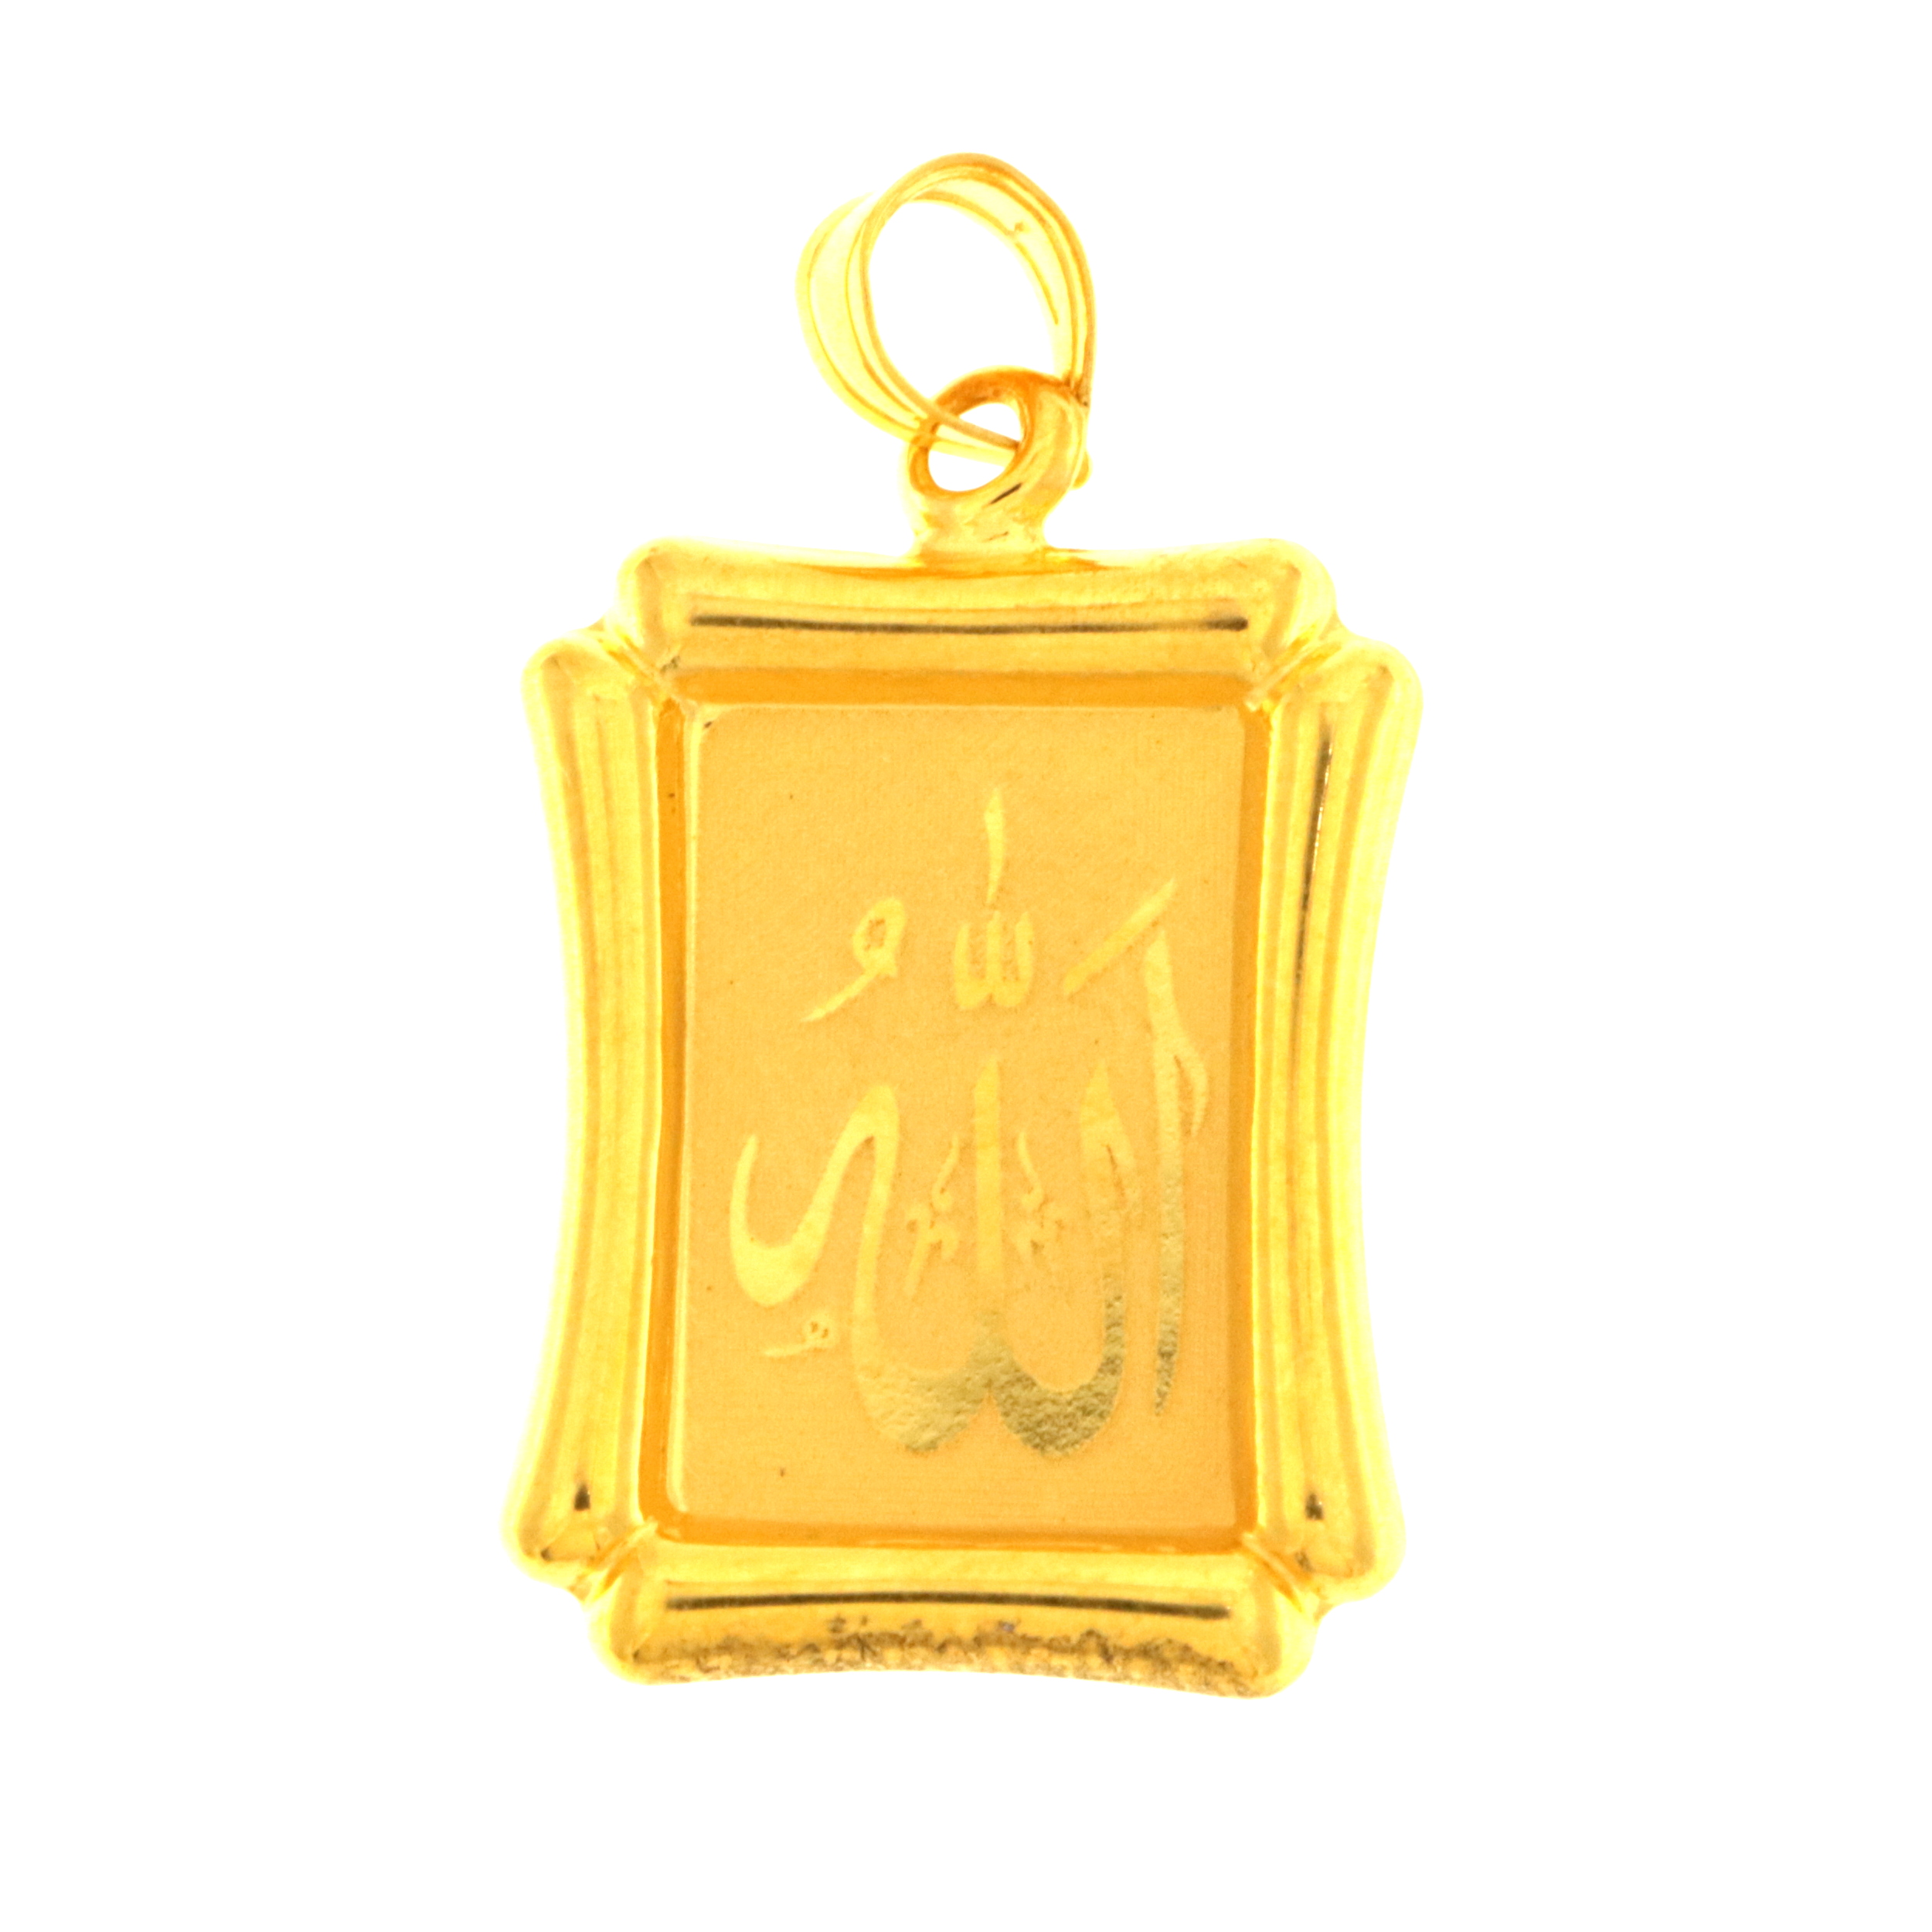 22ct Gold 'Allah' Pendant